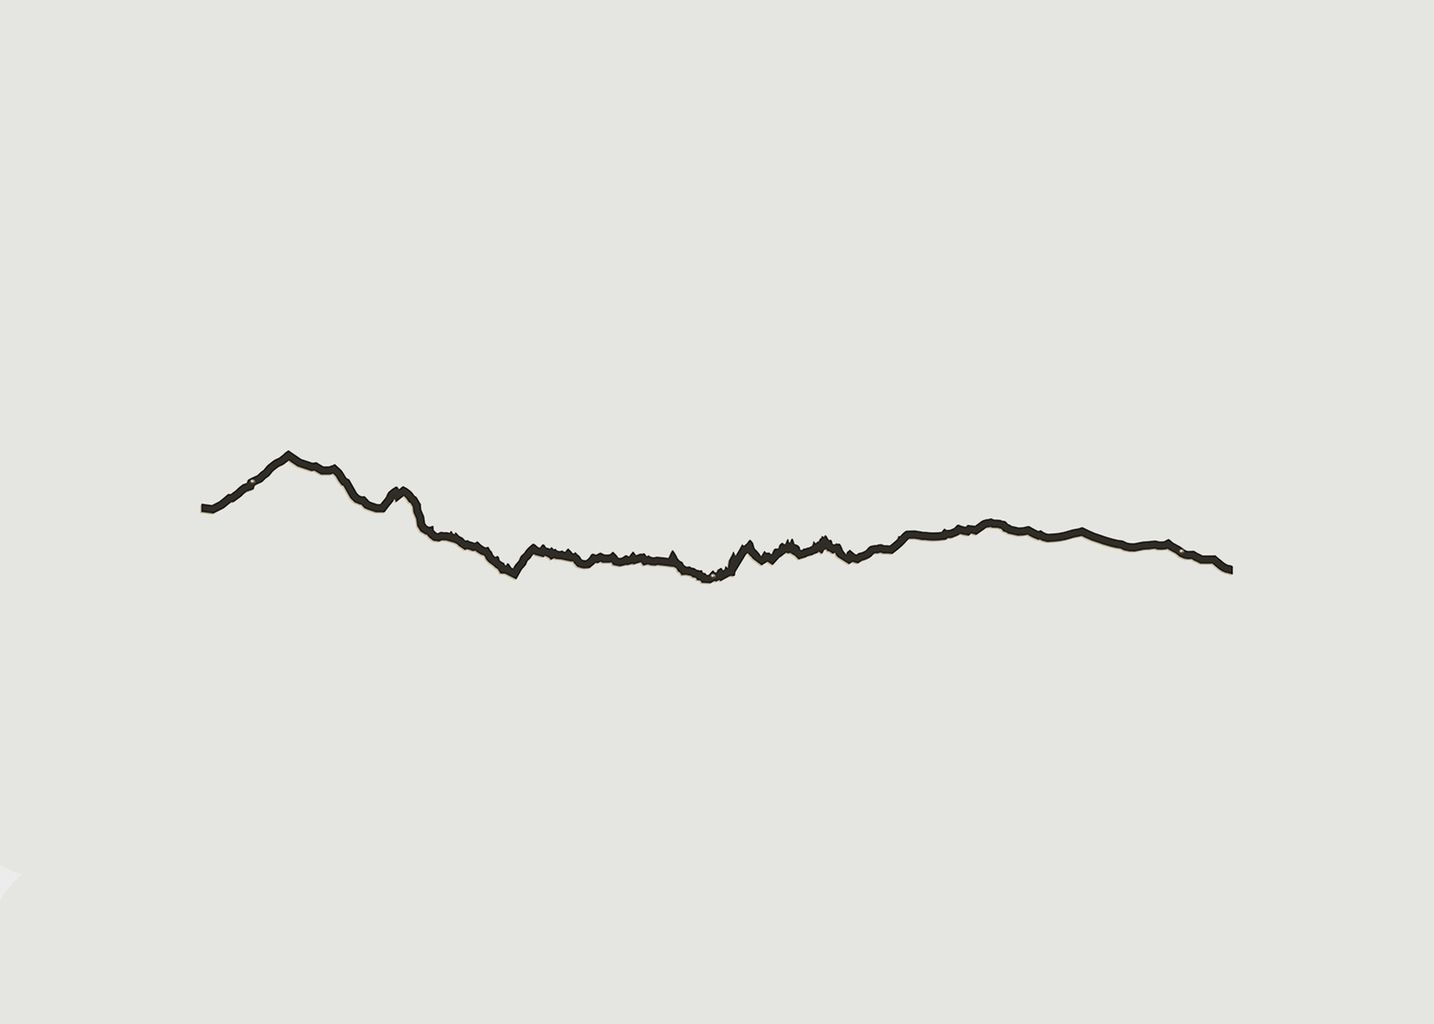 Mont Blanc Line - The Line